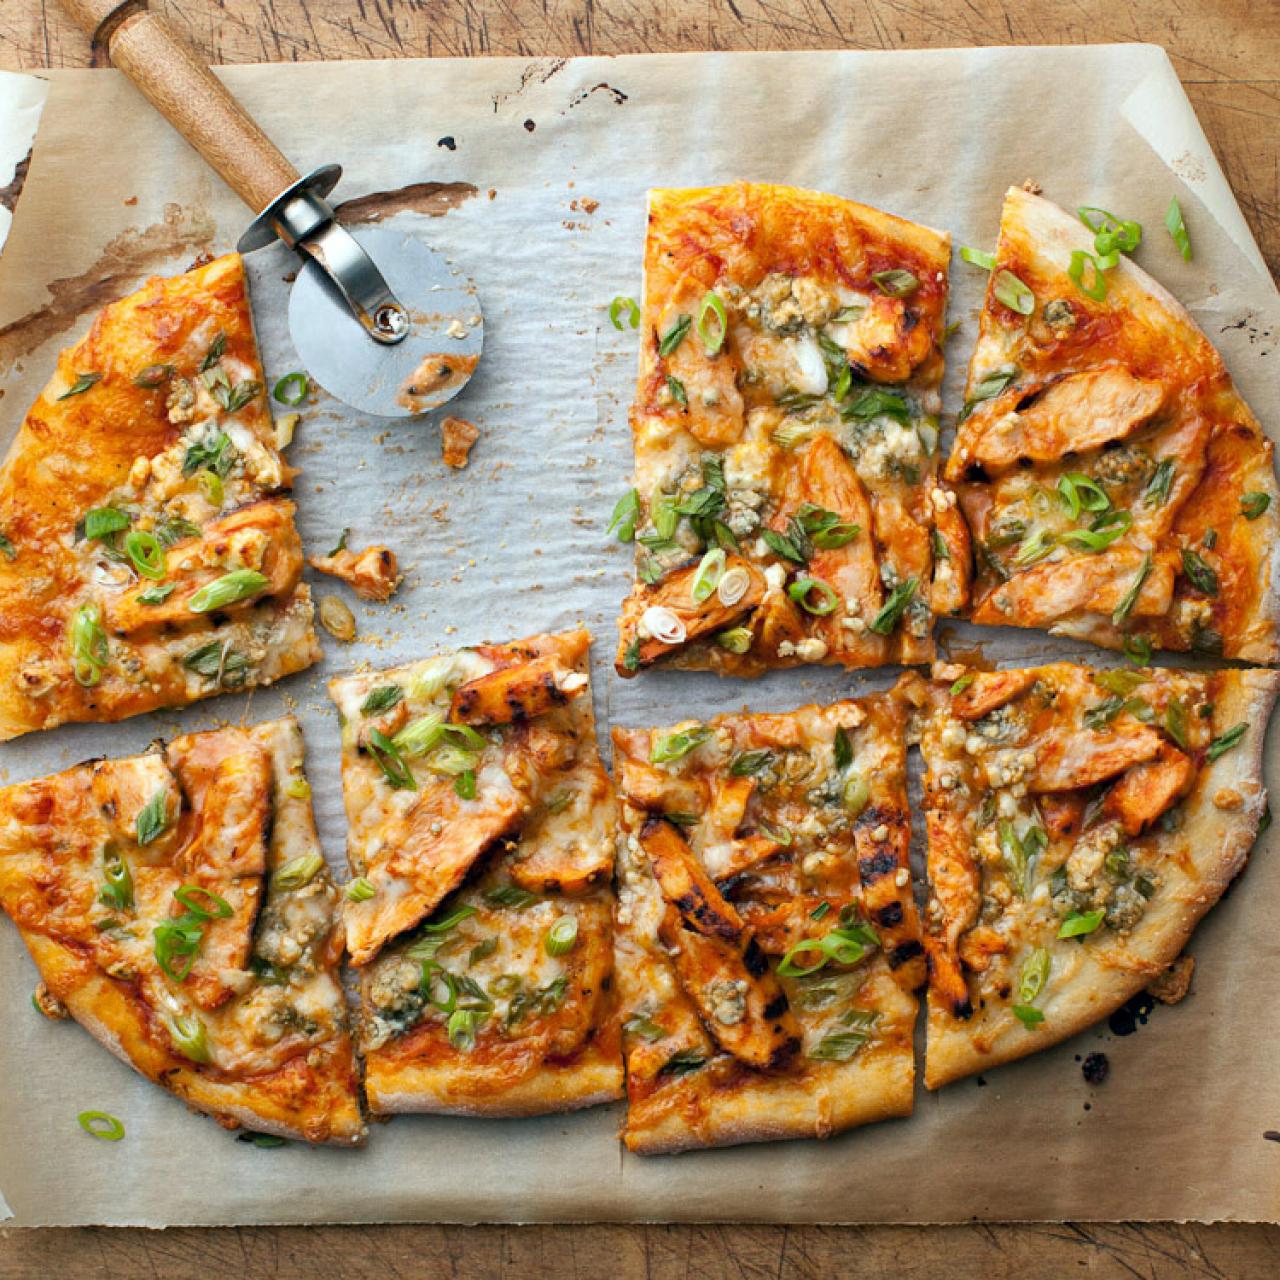 Ryan's Pizza Blog: How to season a pizza pan